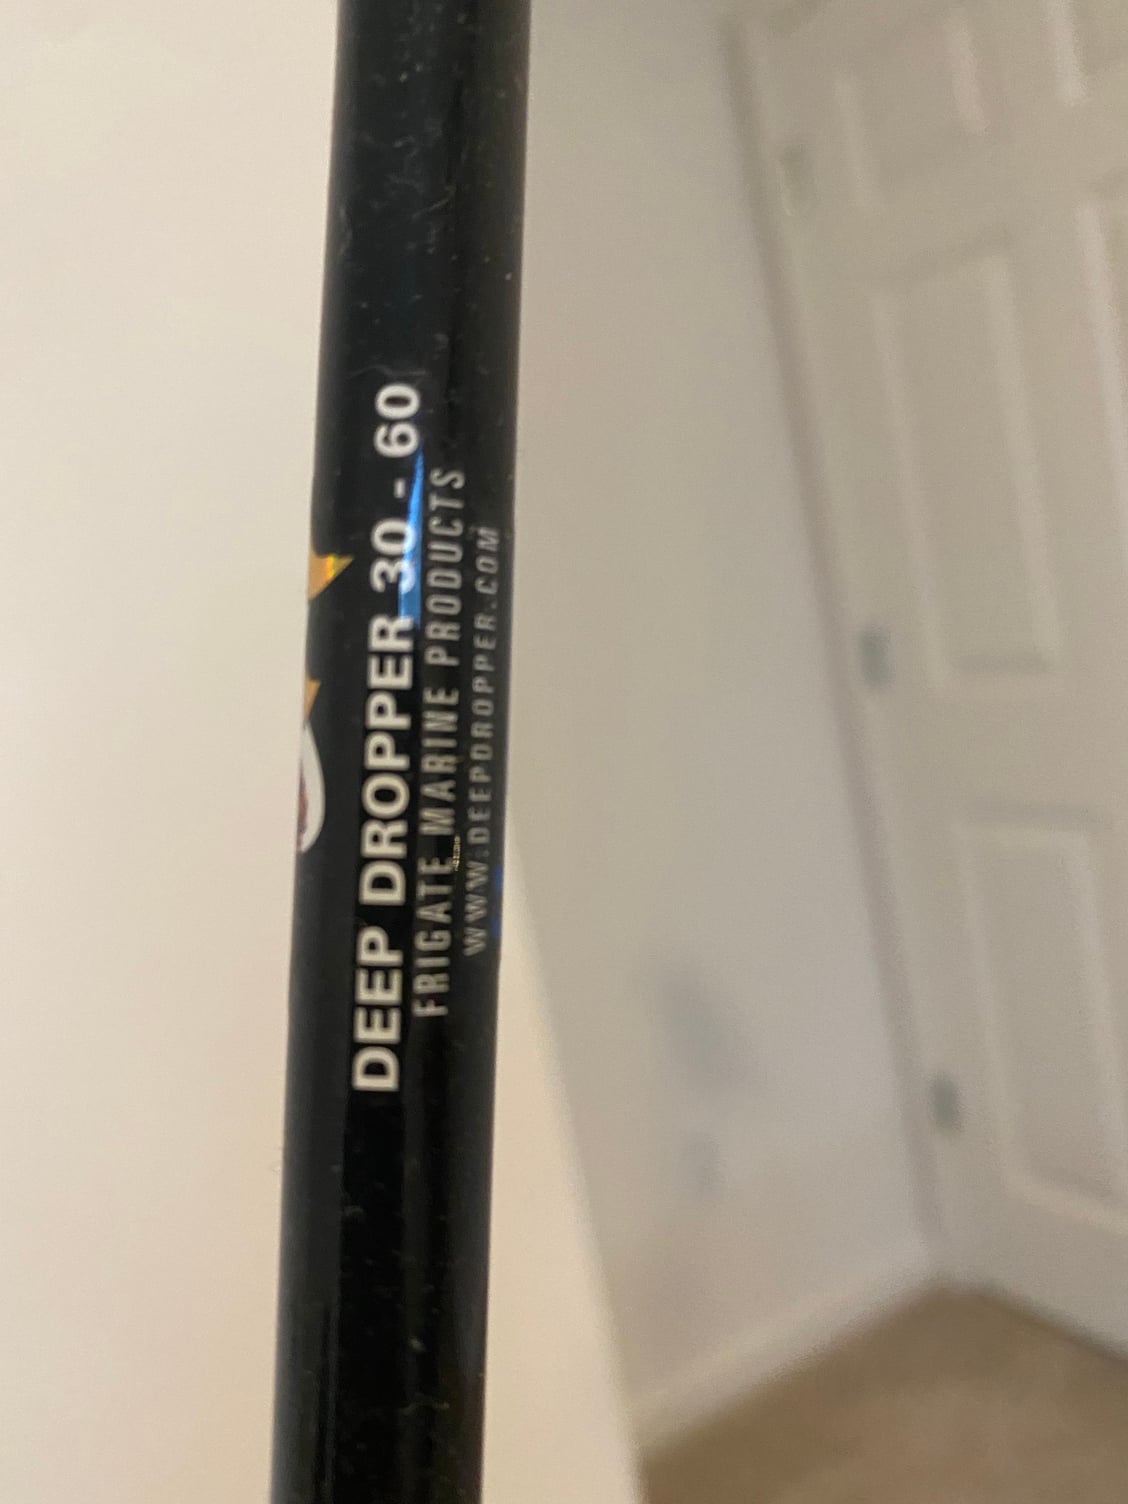 Banax Deep Dropper 30/60 Rod